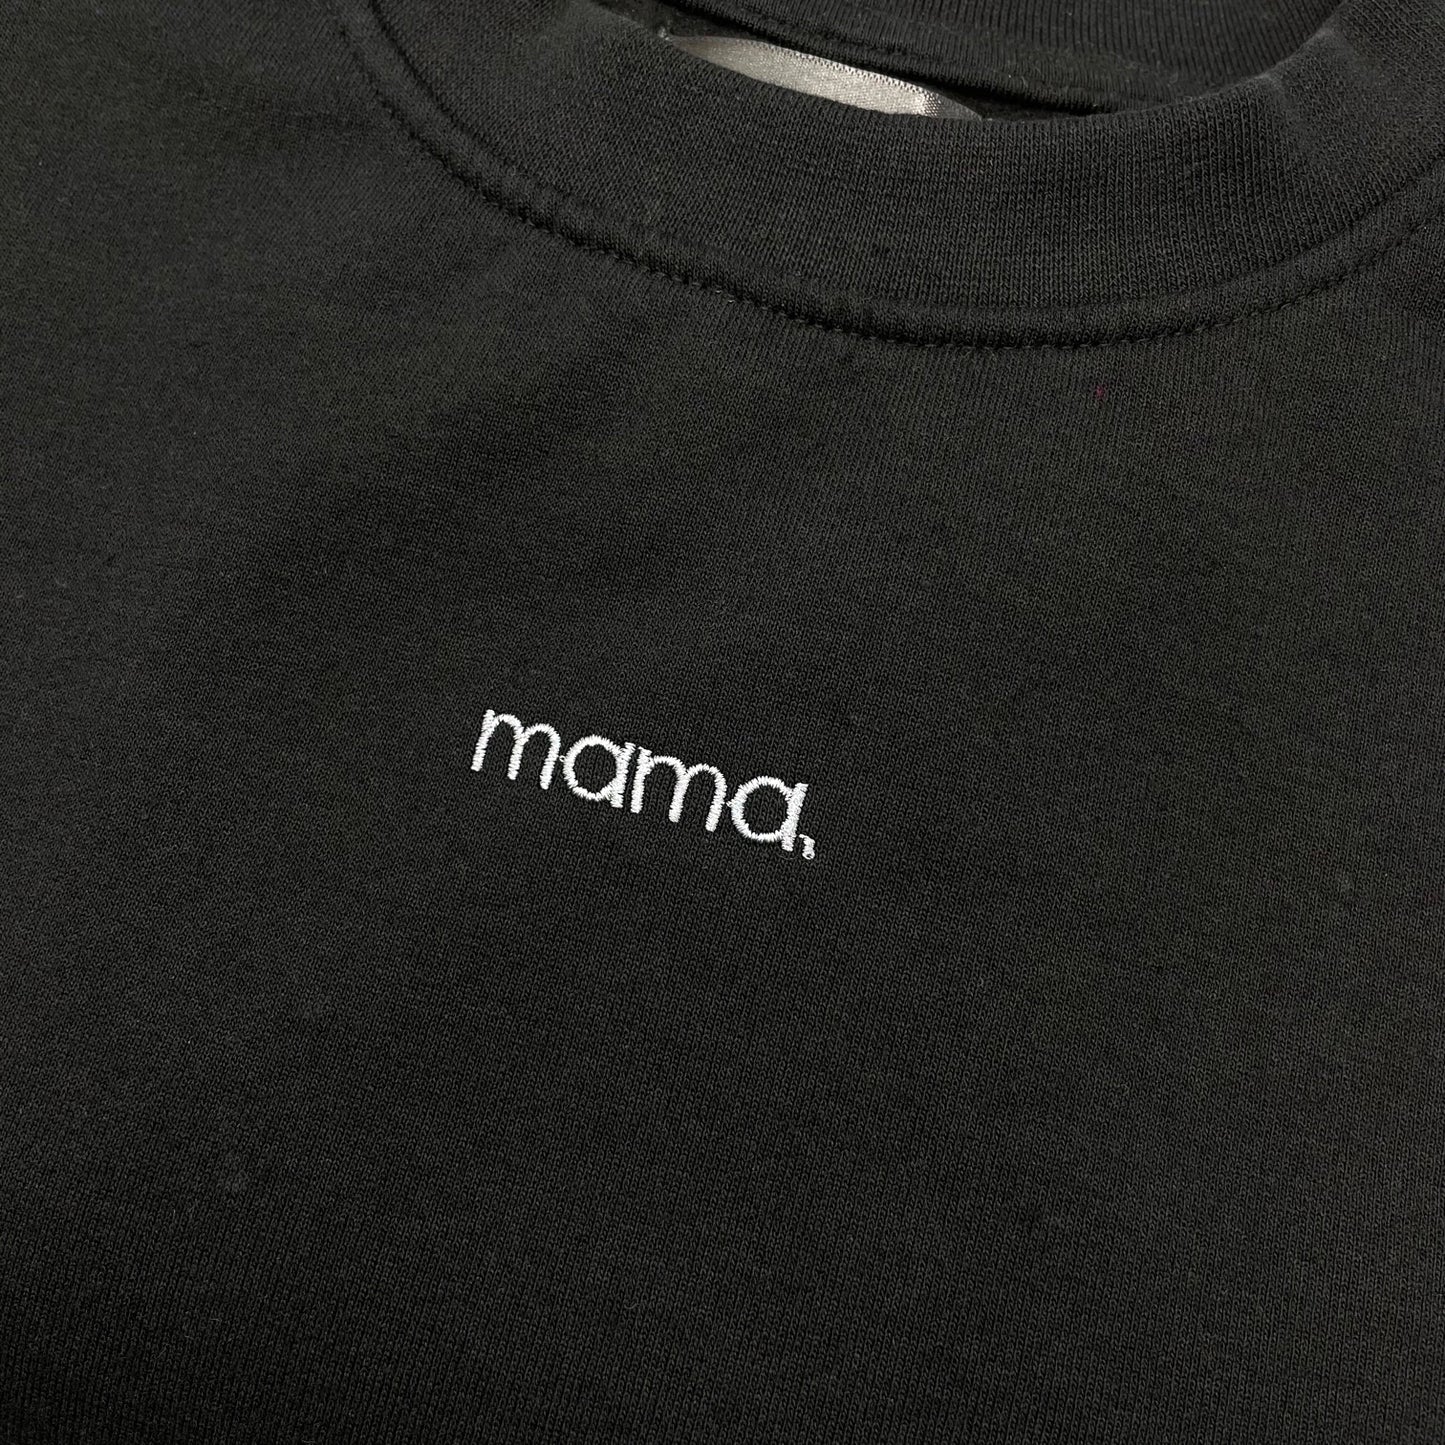 mama sweatshirt in black by the 5am mama